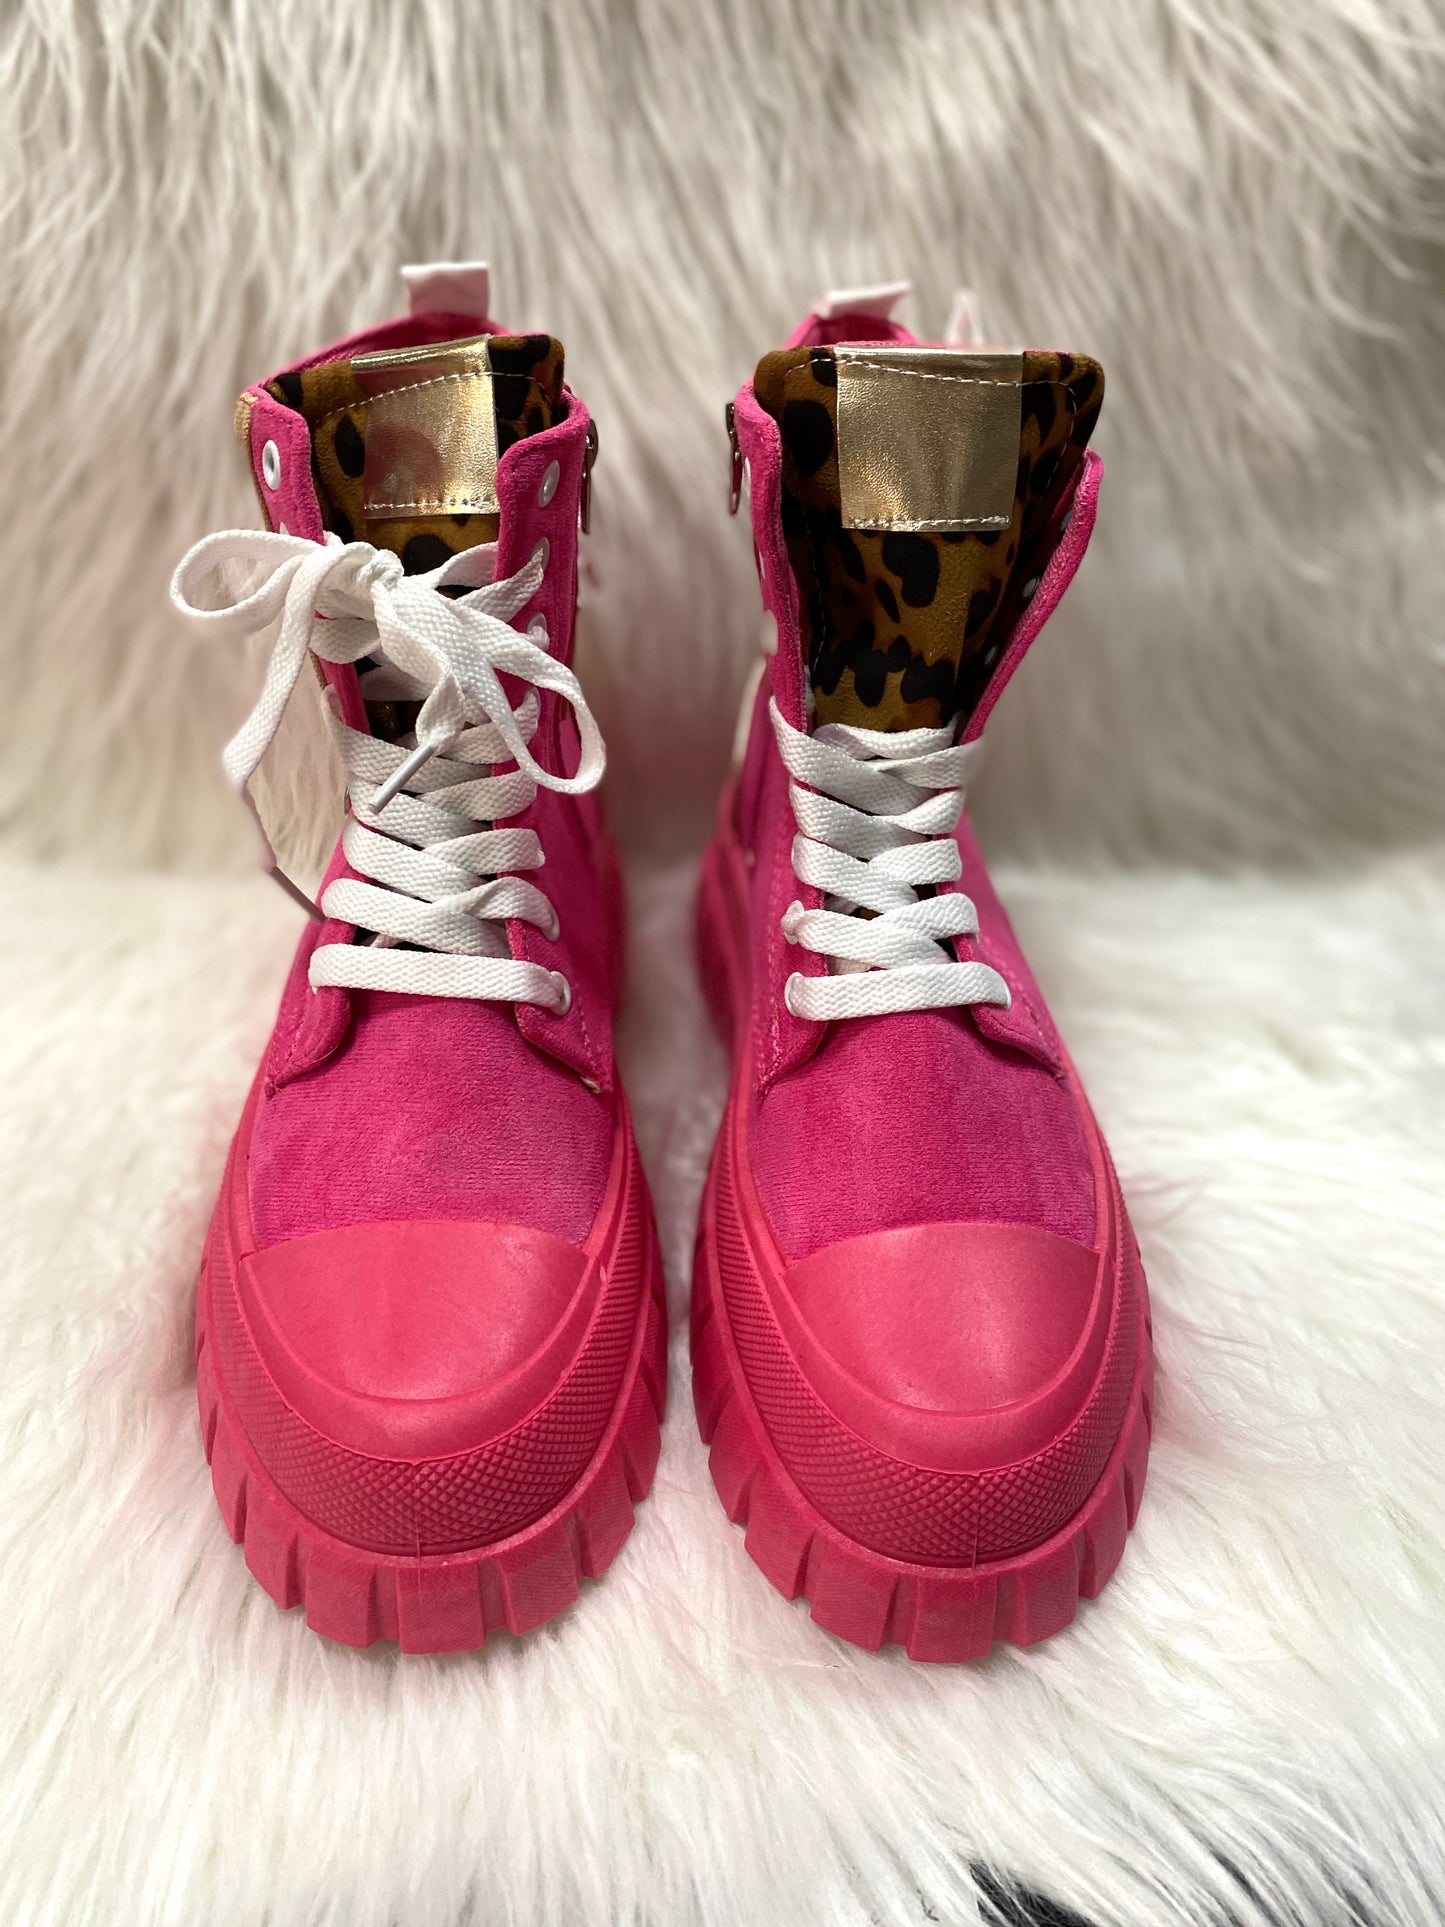 Boots pink mit gold